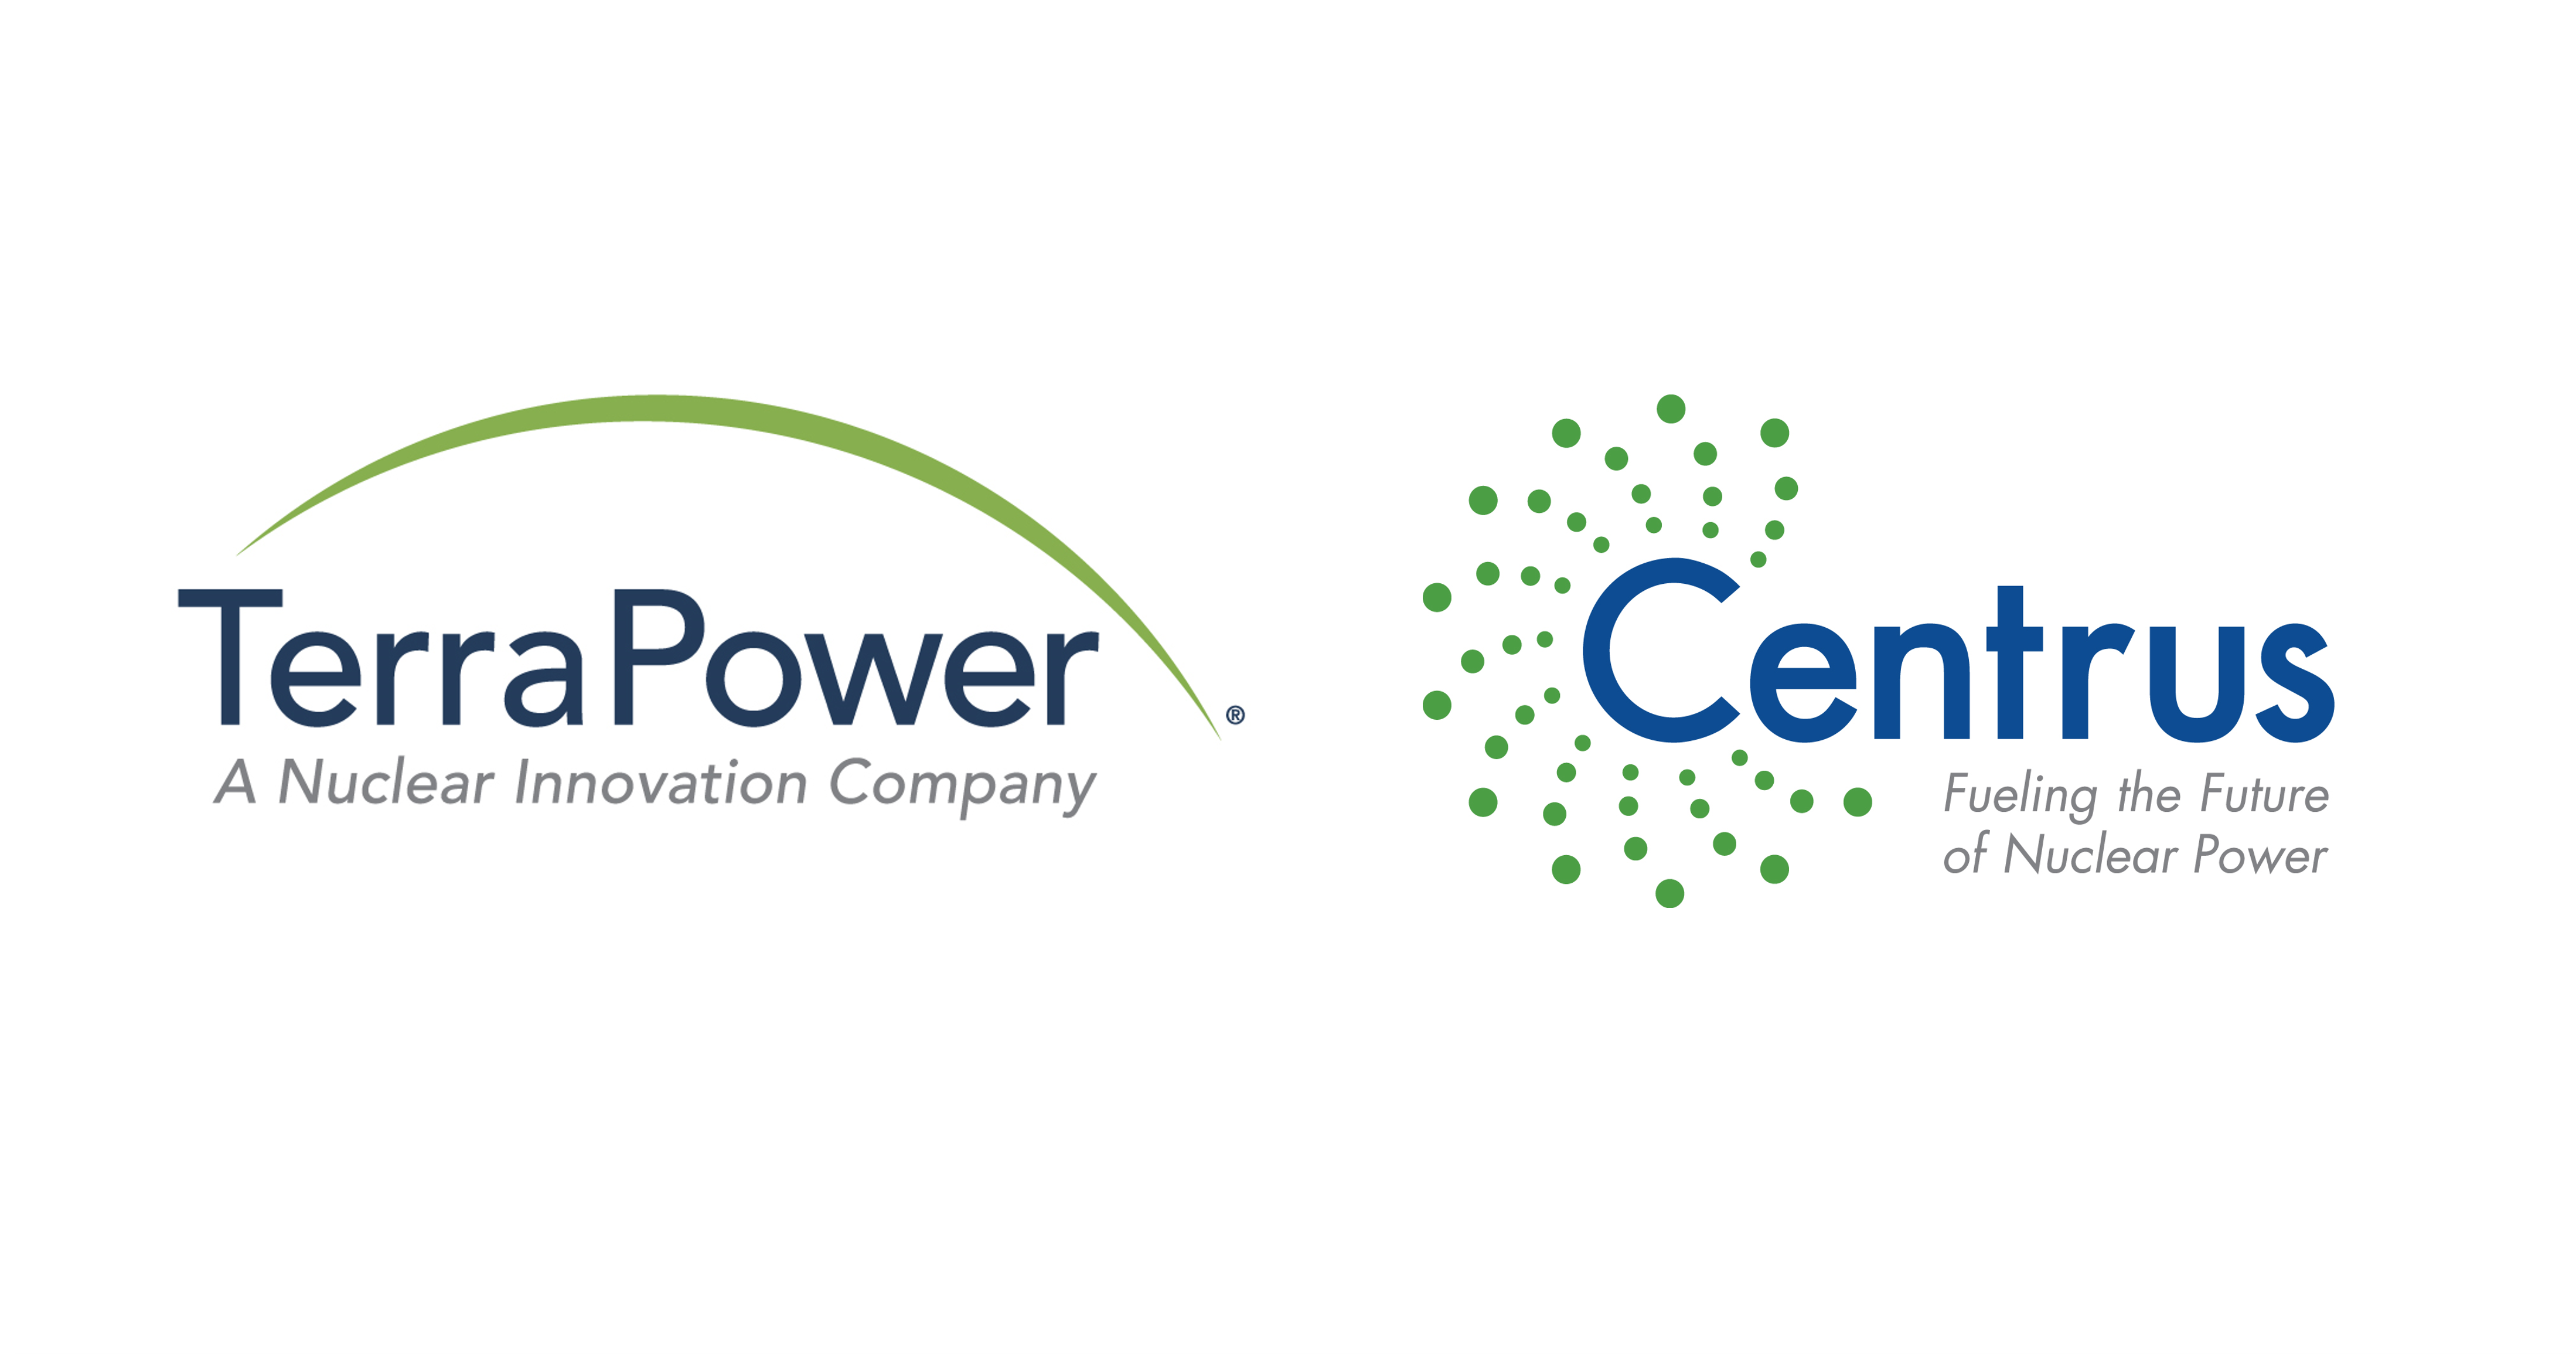 TerraPower and Centrus expand efforts to commercialize domestic HALEU production